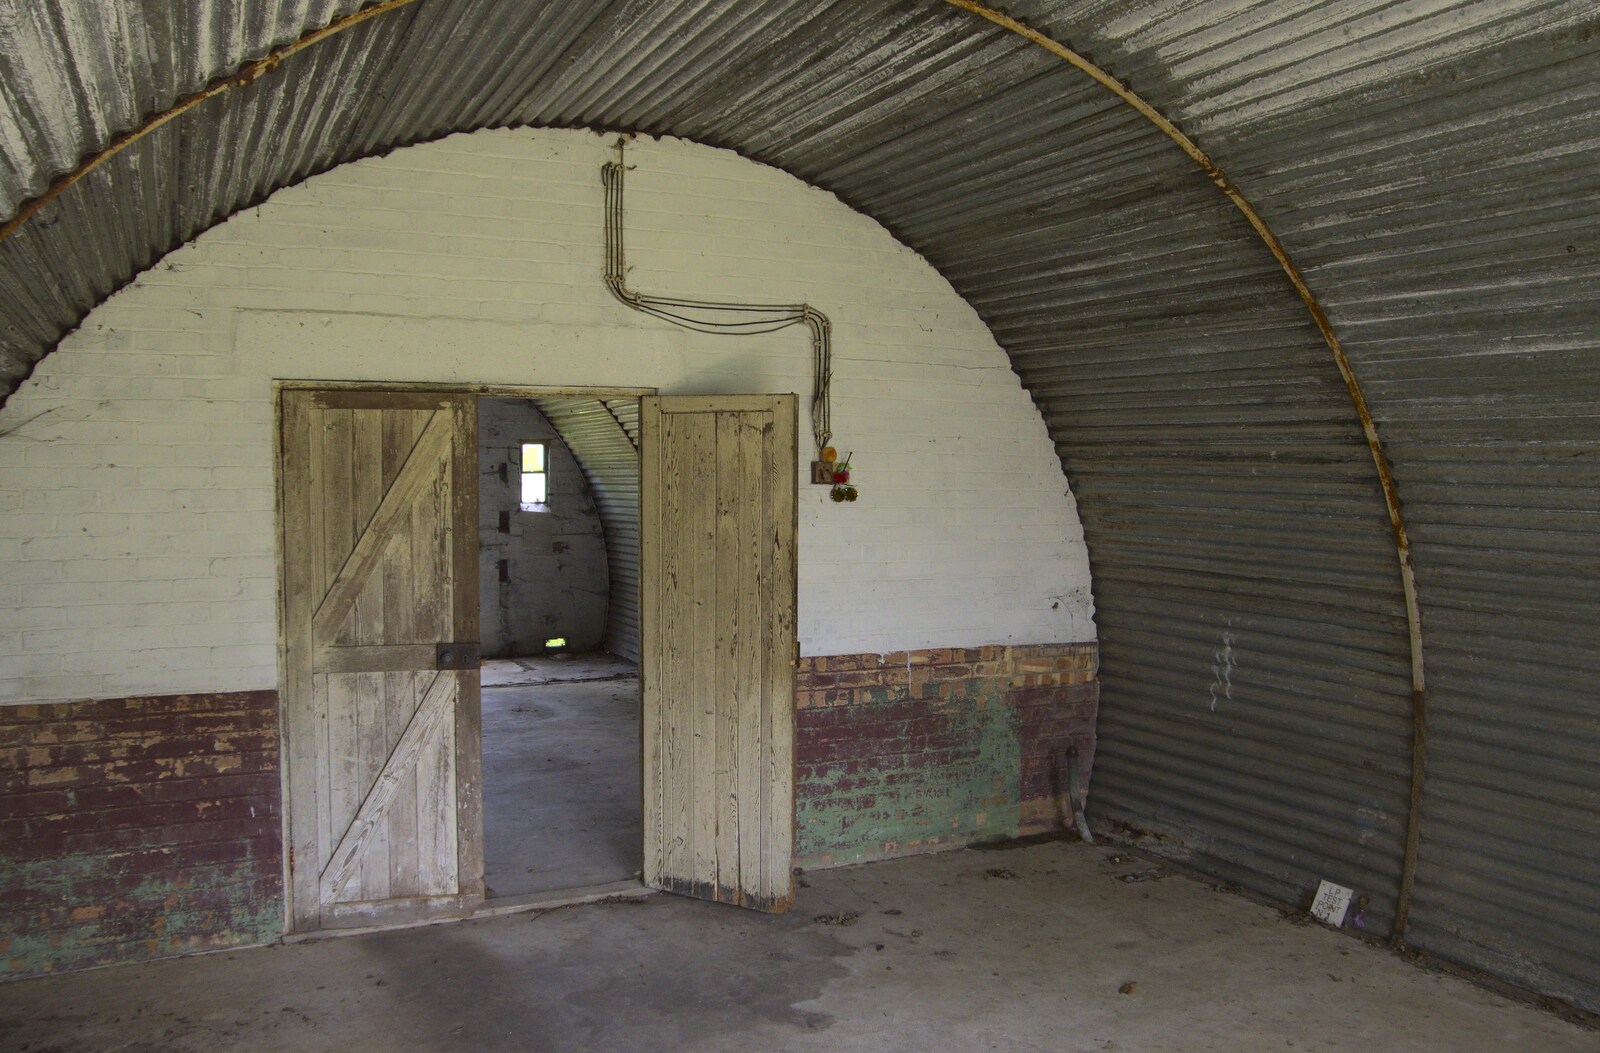 An original Nissen hut from A 1940s Timewarp, Site 4, Bungay Airfield, Flixton, Suffolk - 9th June 2022